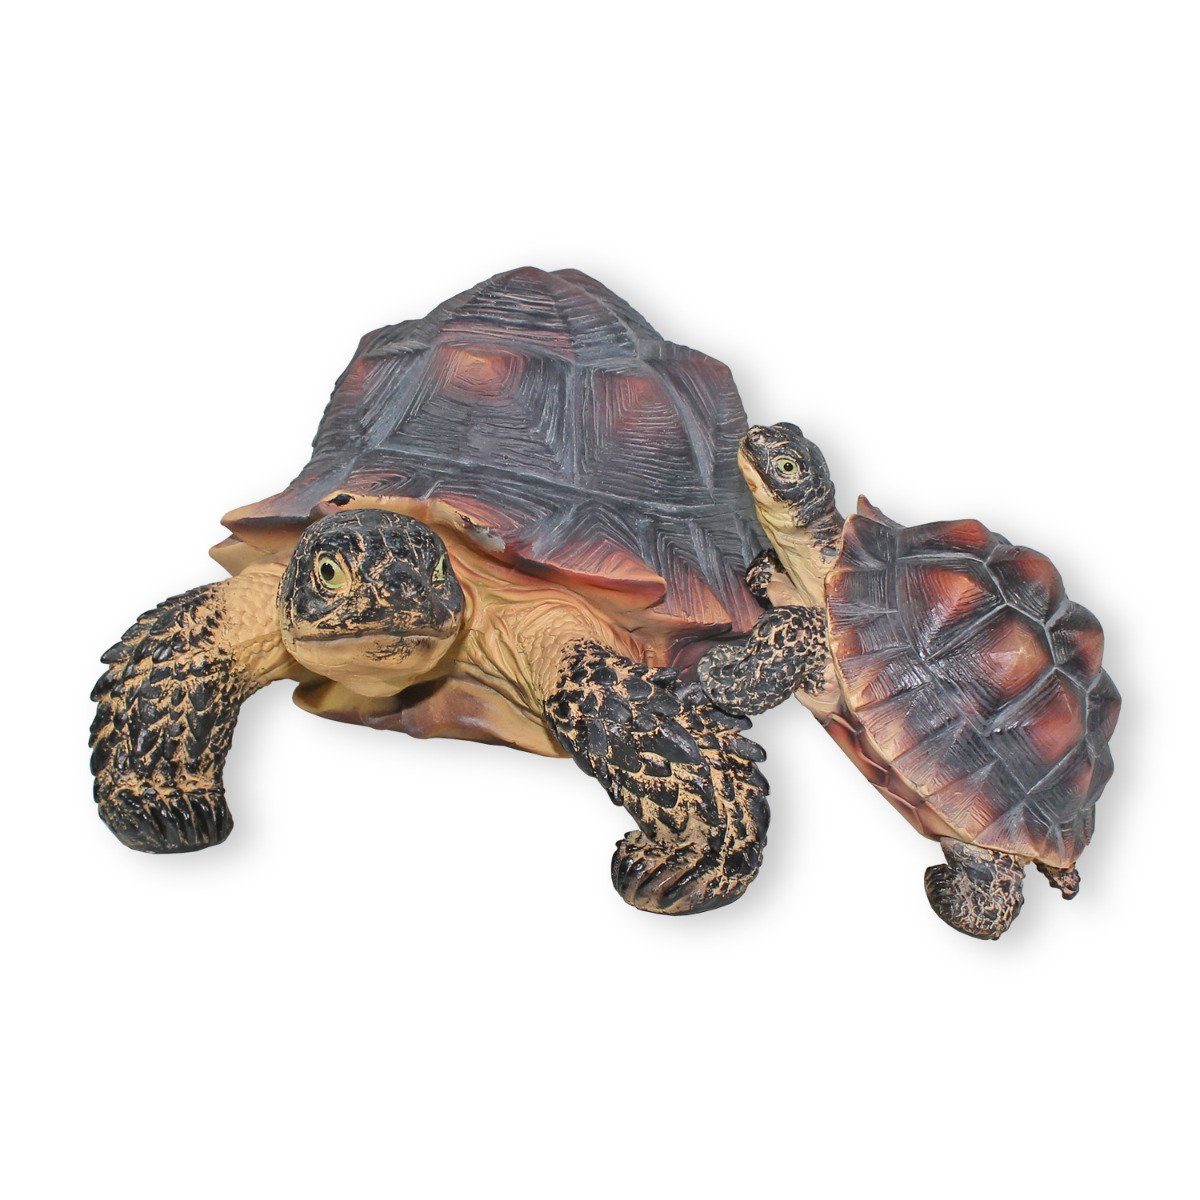 Sofort lieferbar colourliving Tierfigur Schildkröten Figuren Darstellung Realistische Handbemalt, Wetterfest, Deko Set 2er Schildkröte